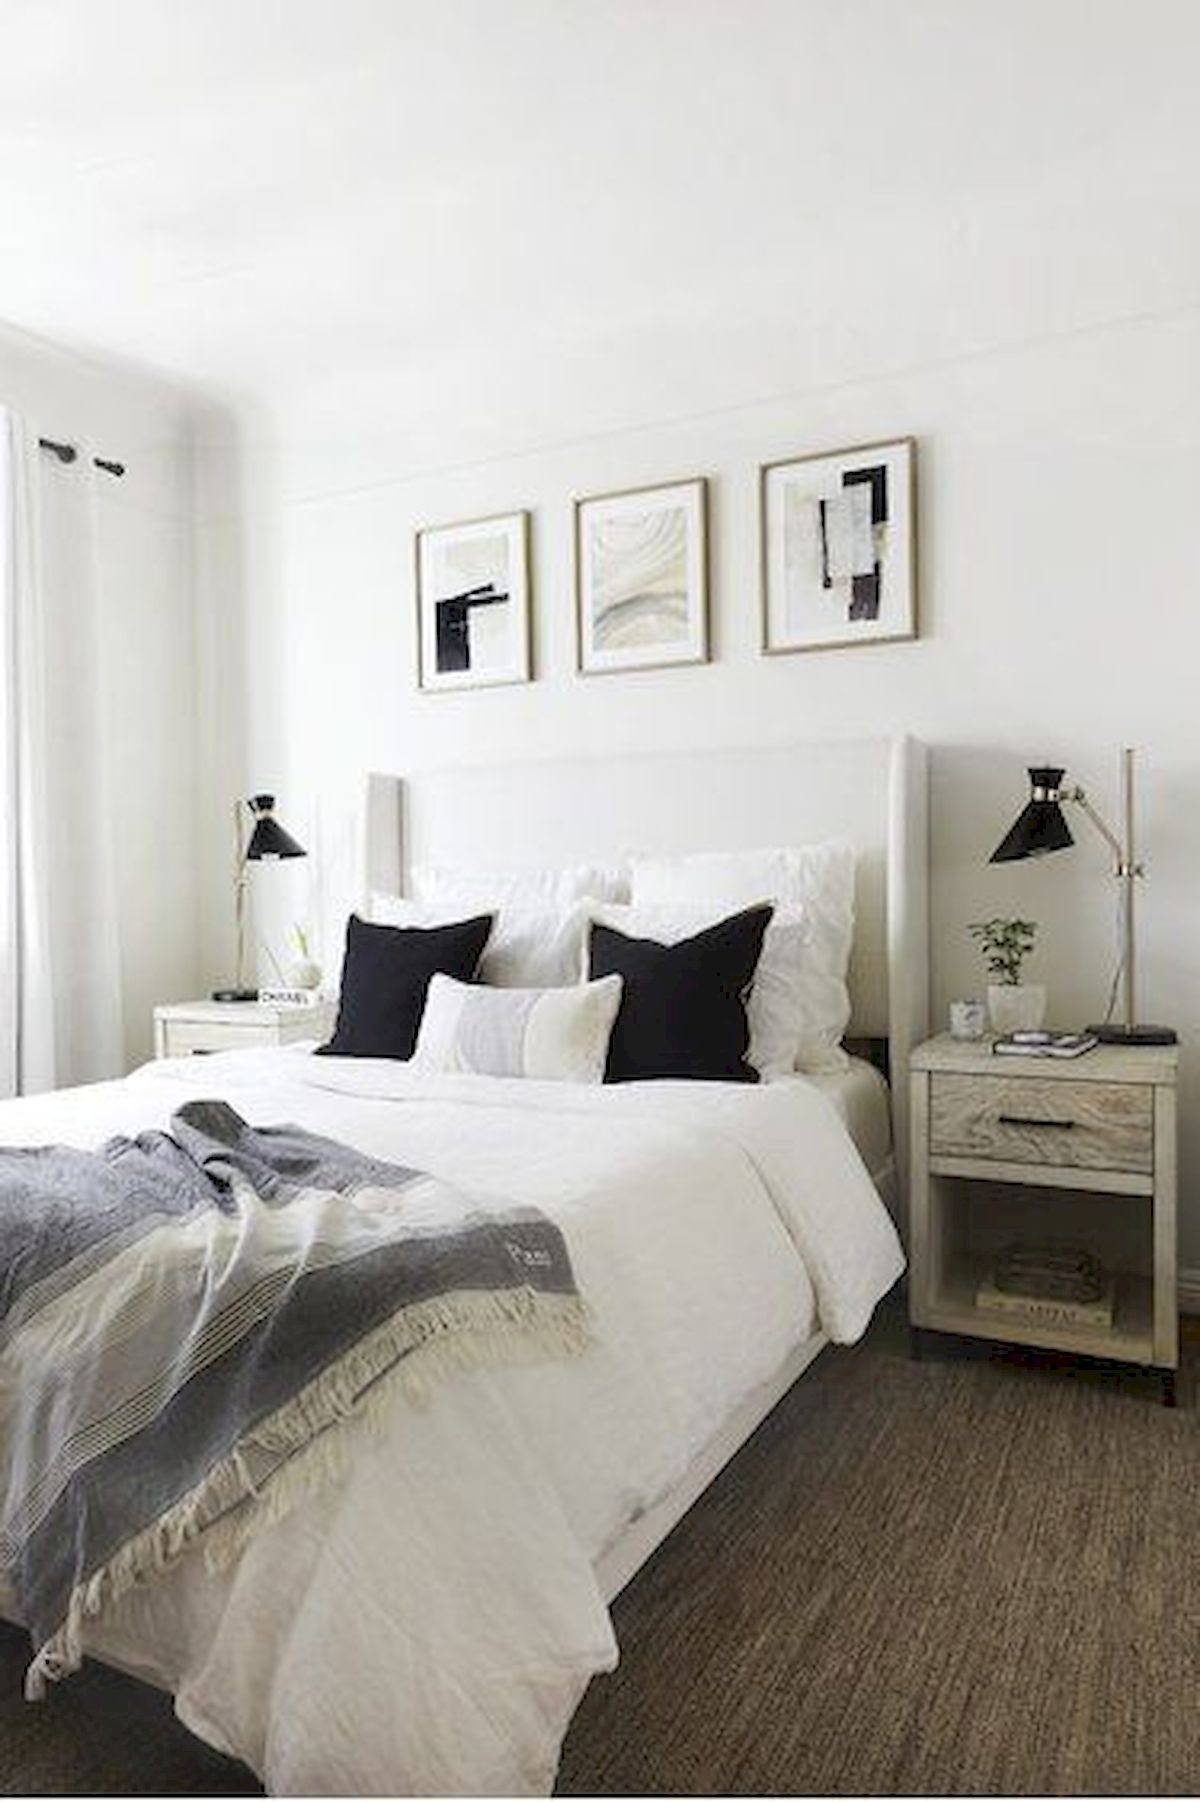 60 Beautiful Bedroom Decor And Design Ideas (17)